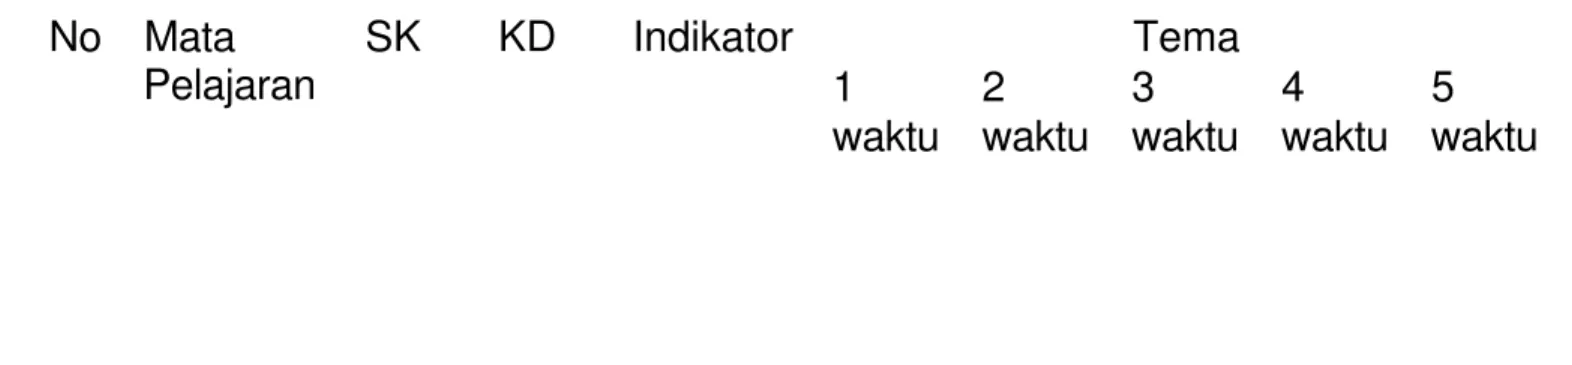 Tabel 3.2 Hubungan SK,KD,Indikator, dan Tema No  Mata